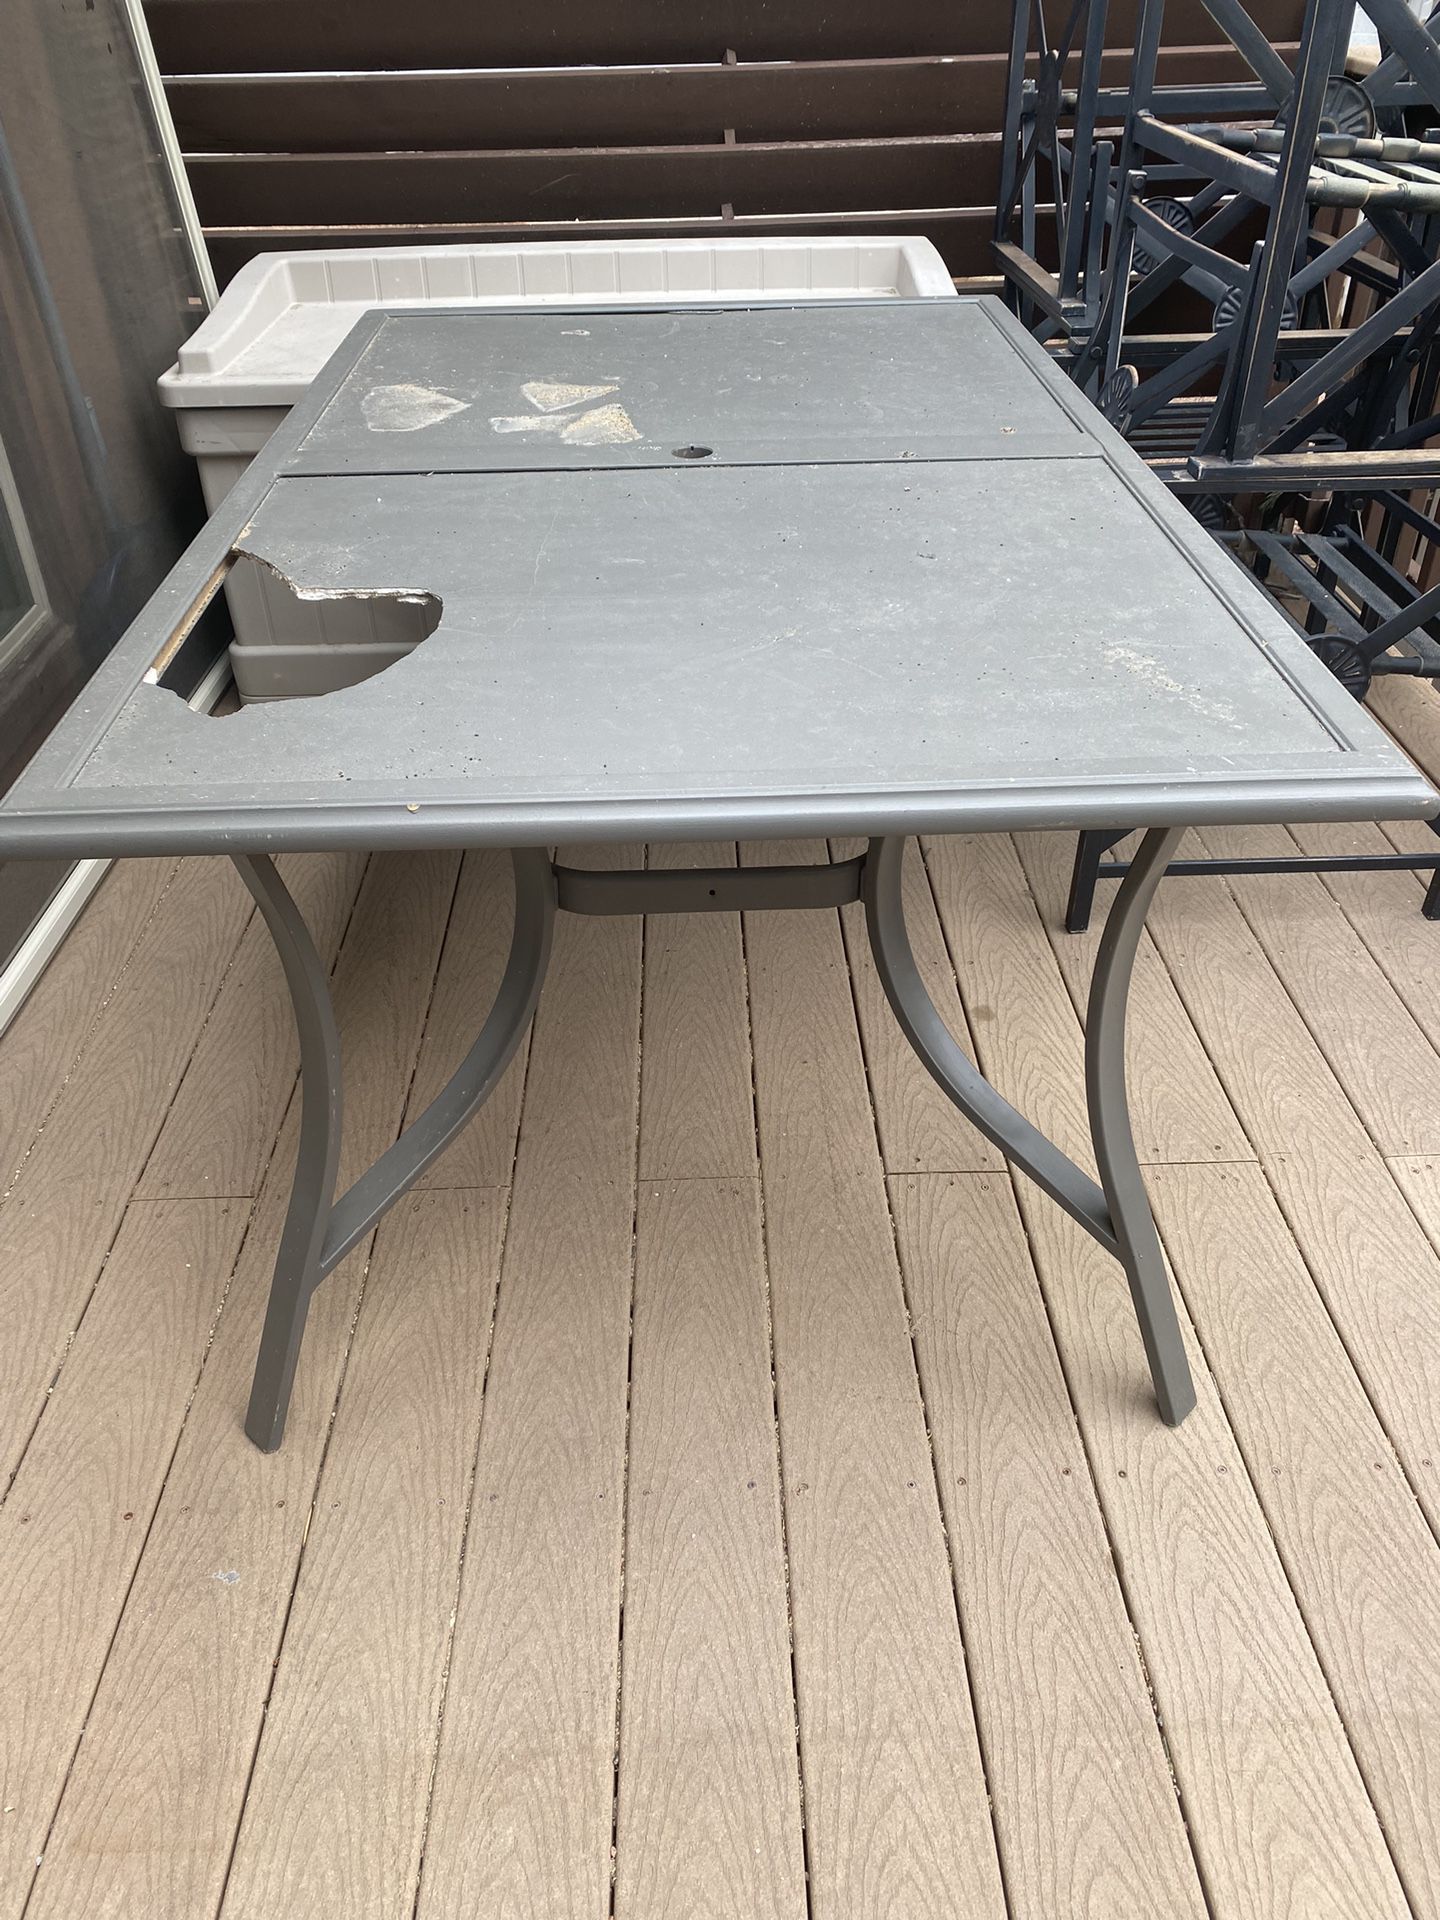 Patio Table - Needs Repair